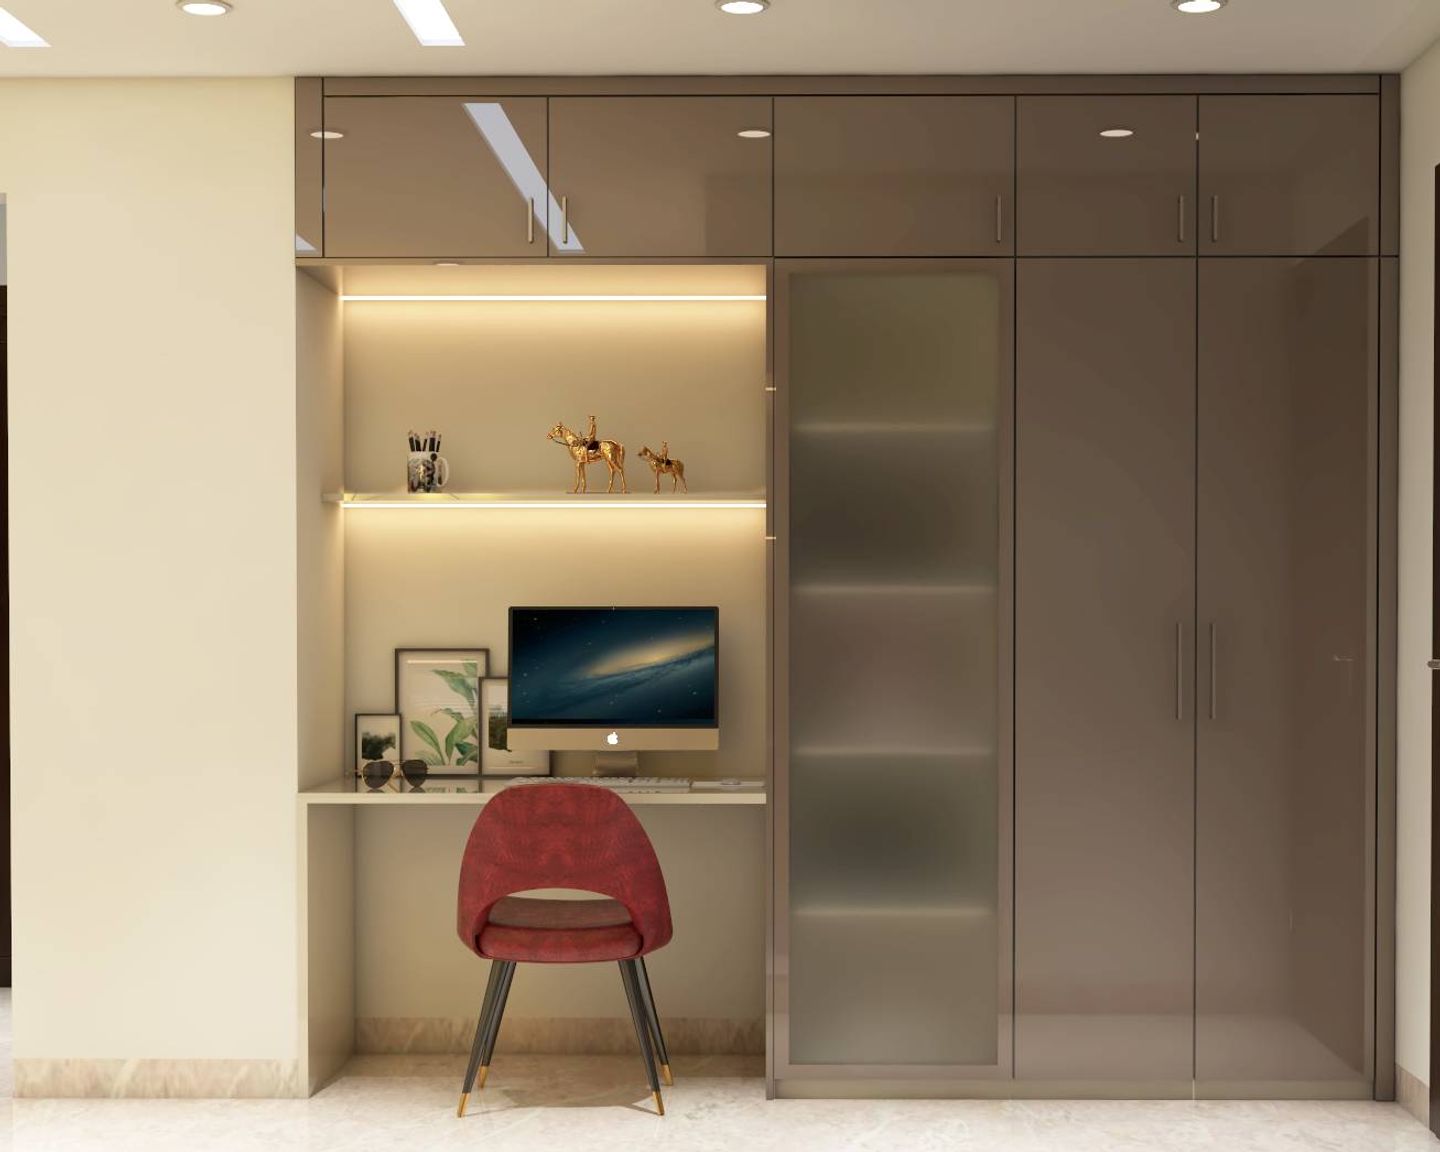 Study Room Design With Chic Storage - Livspace